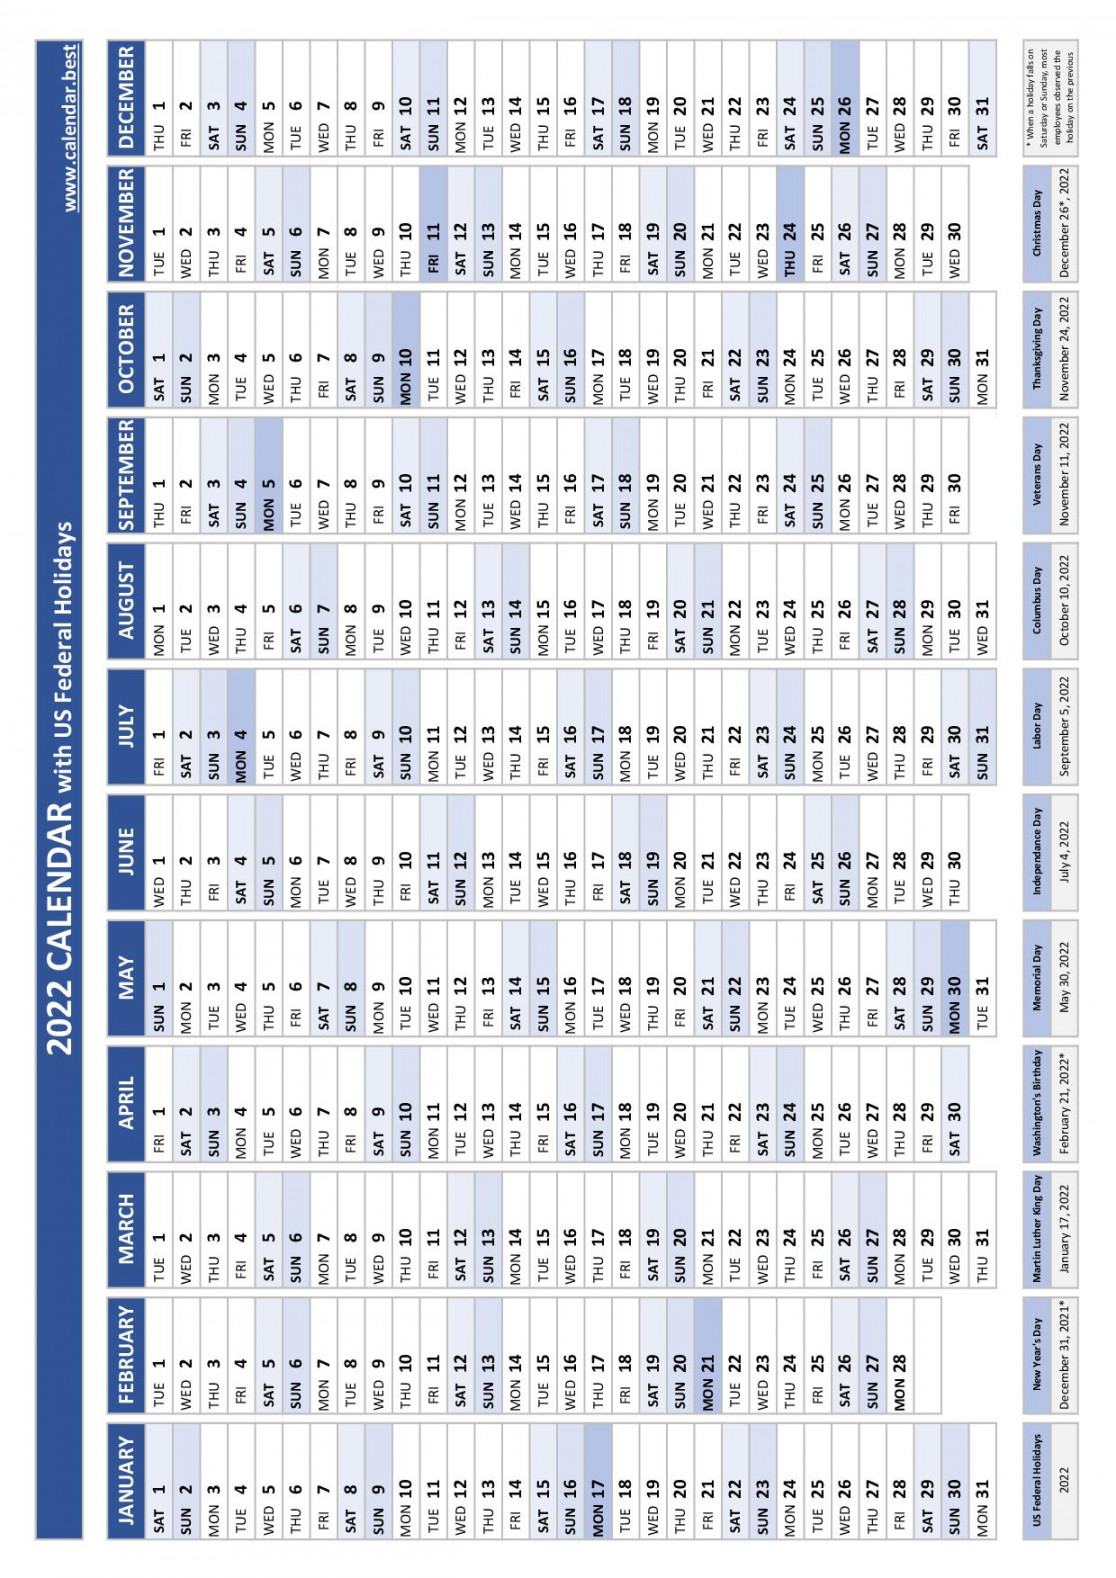 calendar with holidays (US Federal Holidays)